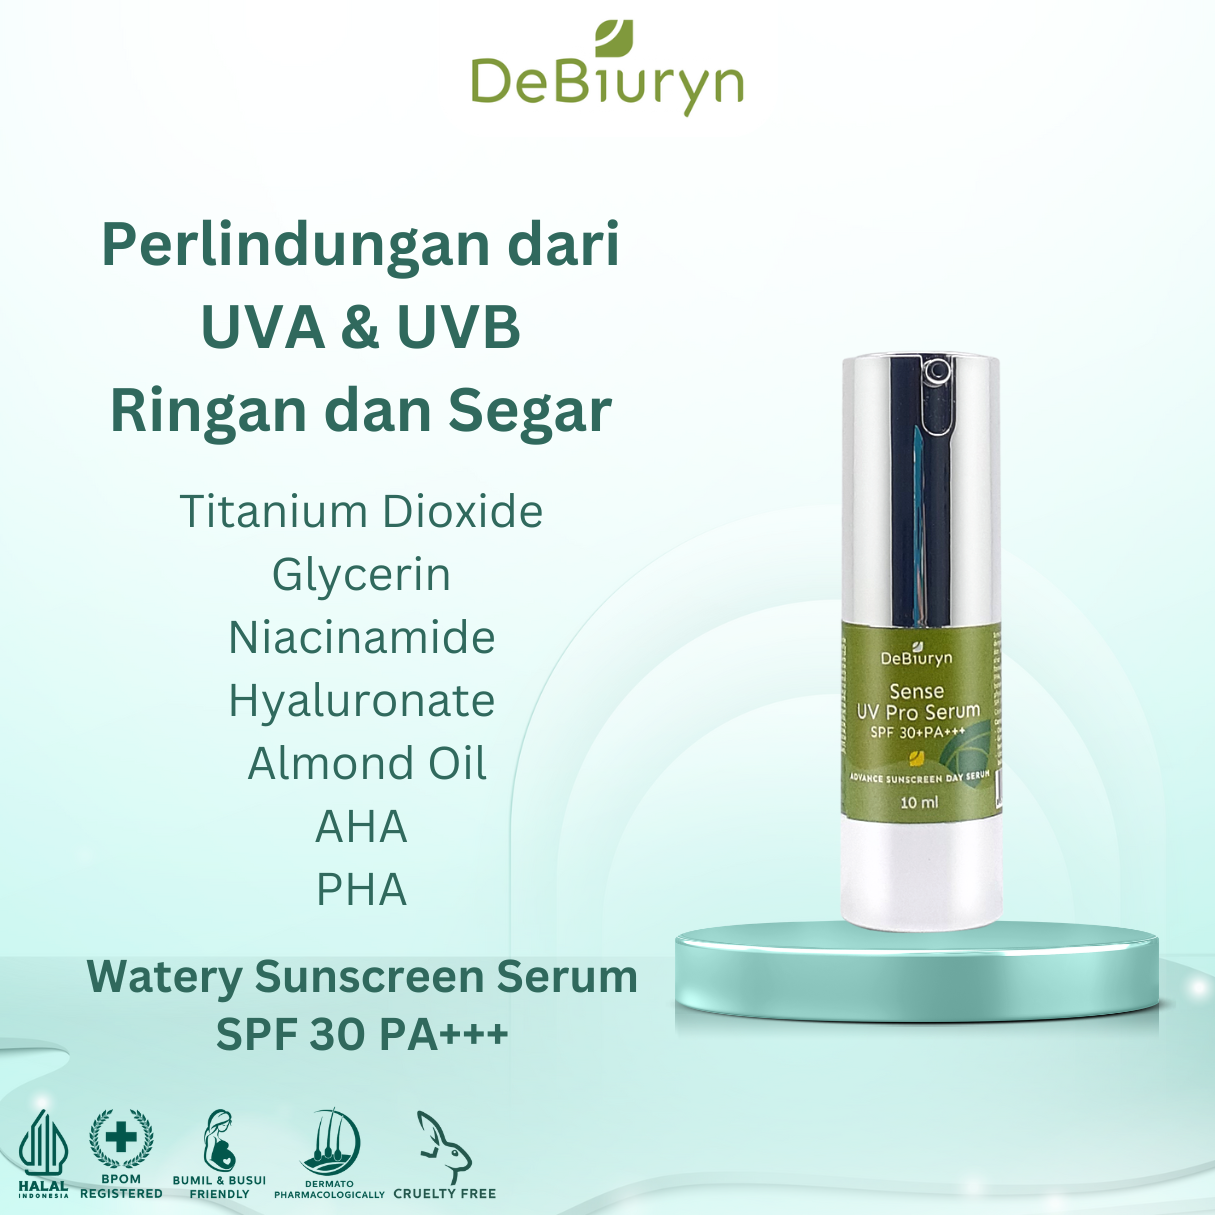 DeBiuryn Sense UV Pro SPF30 PA+++ Serum 10ml - Hybrid Sunscreen 6 in 1 Protection